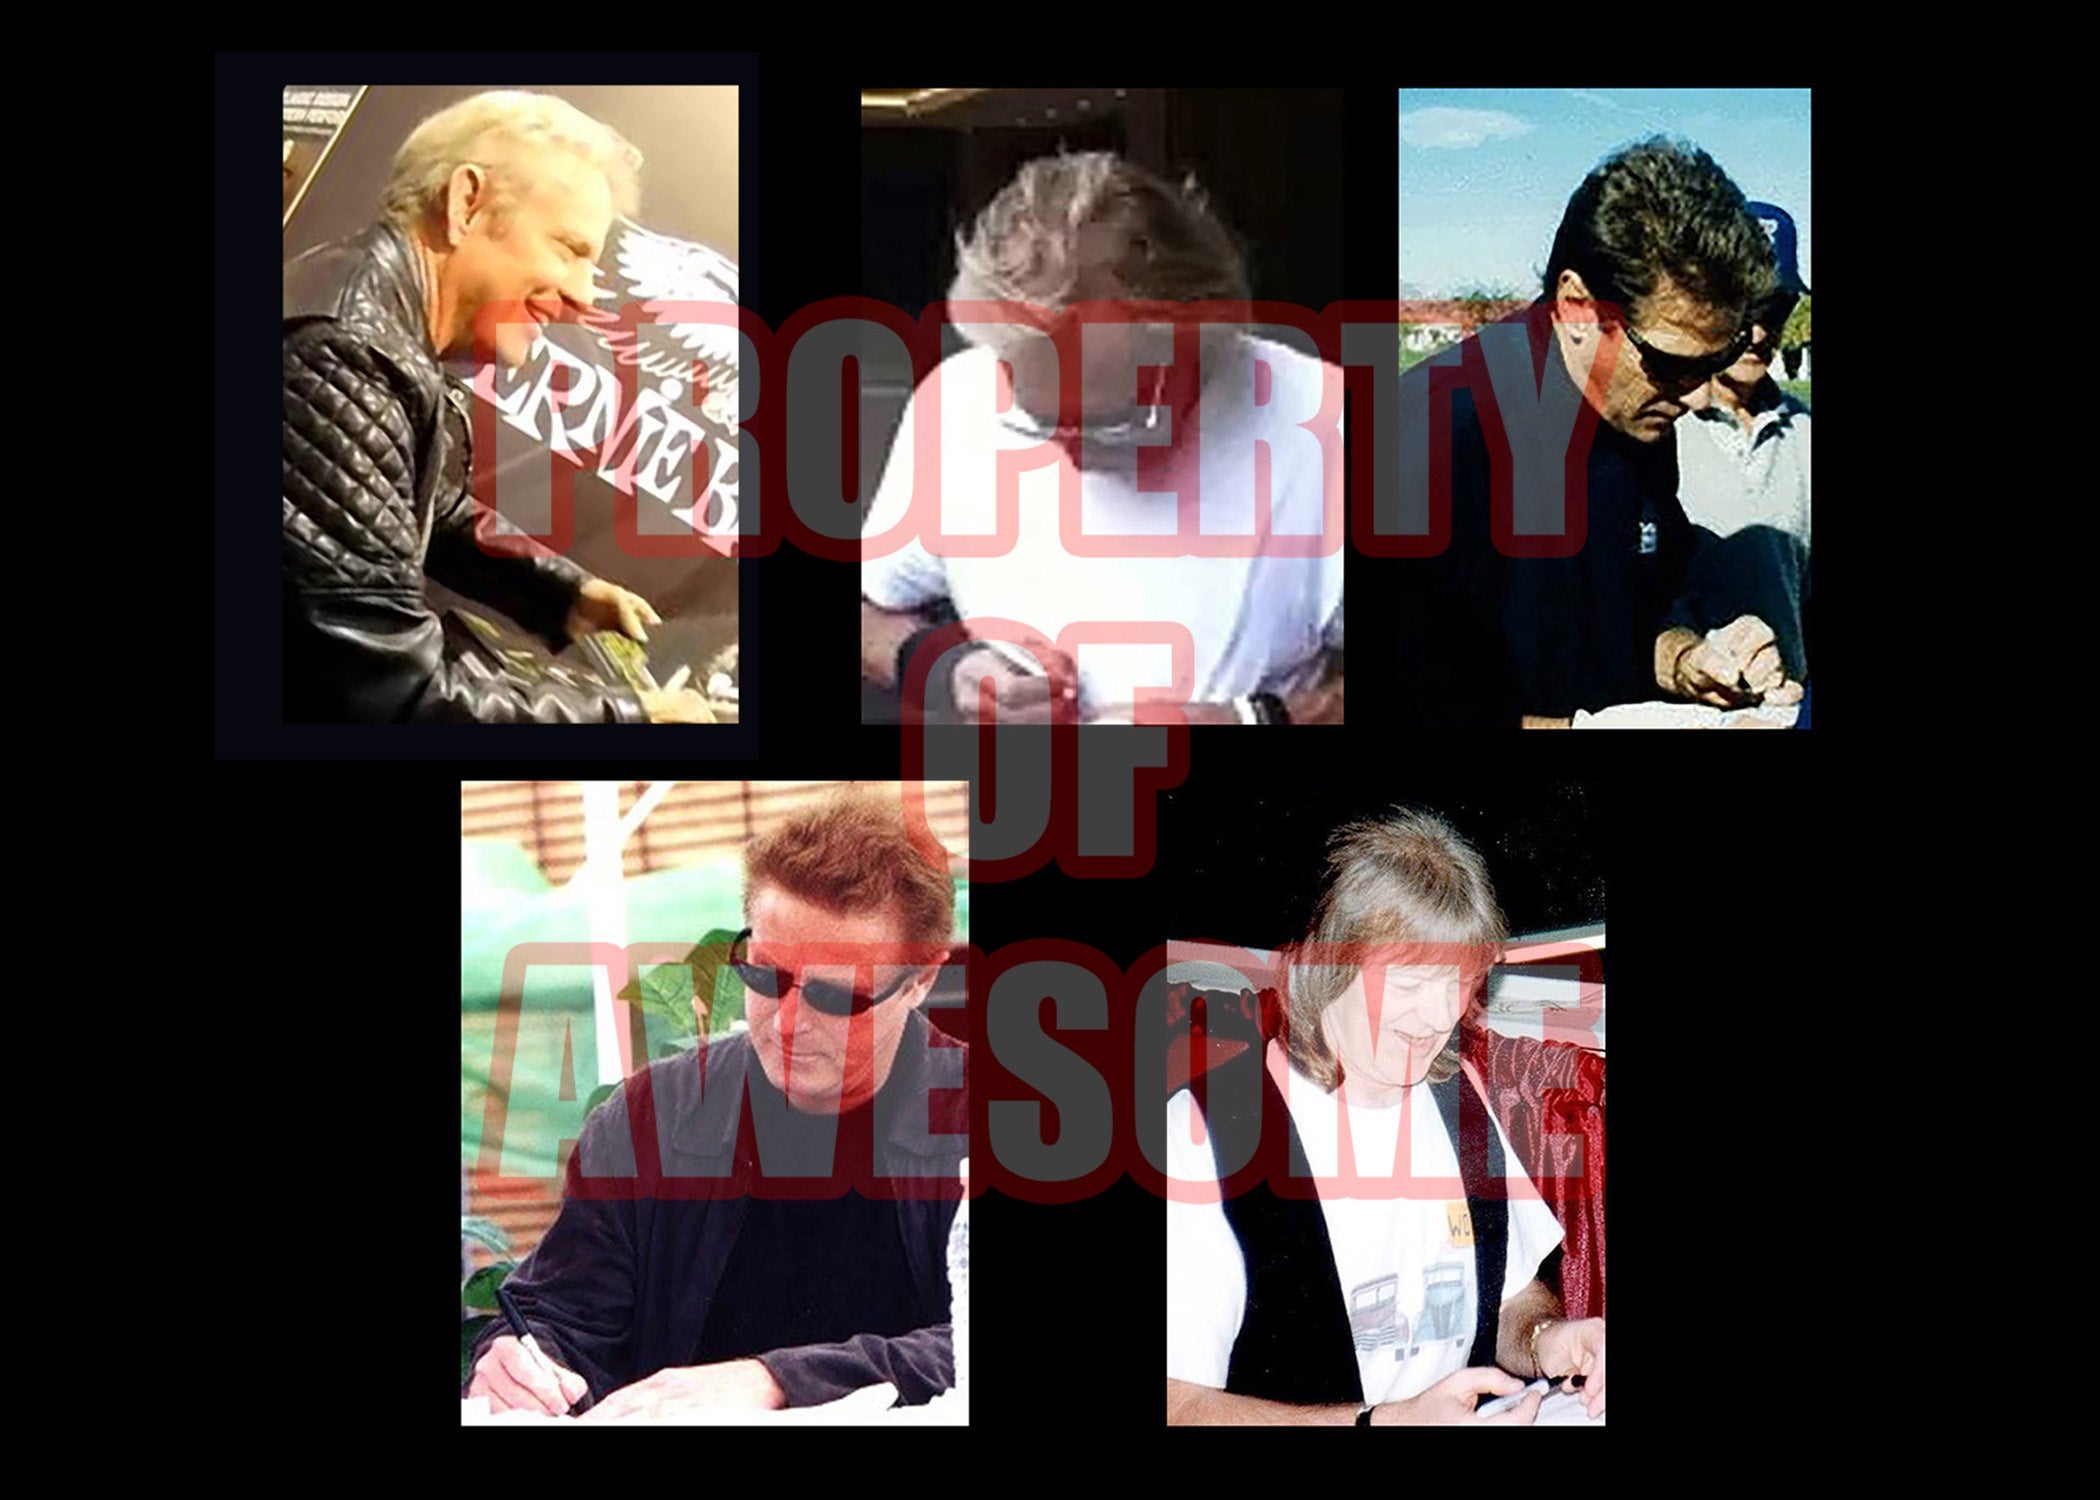 Don Henley, Glenn Frey, Joe Walsh, Randy Meisner, Don Felder the Eagles 14-in tambourine signed with proof